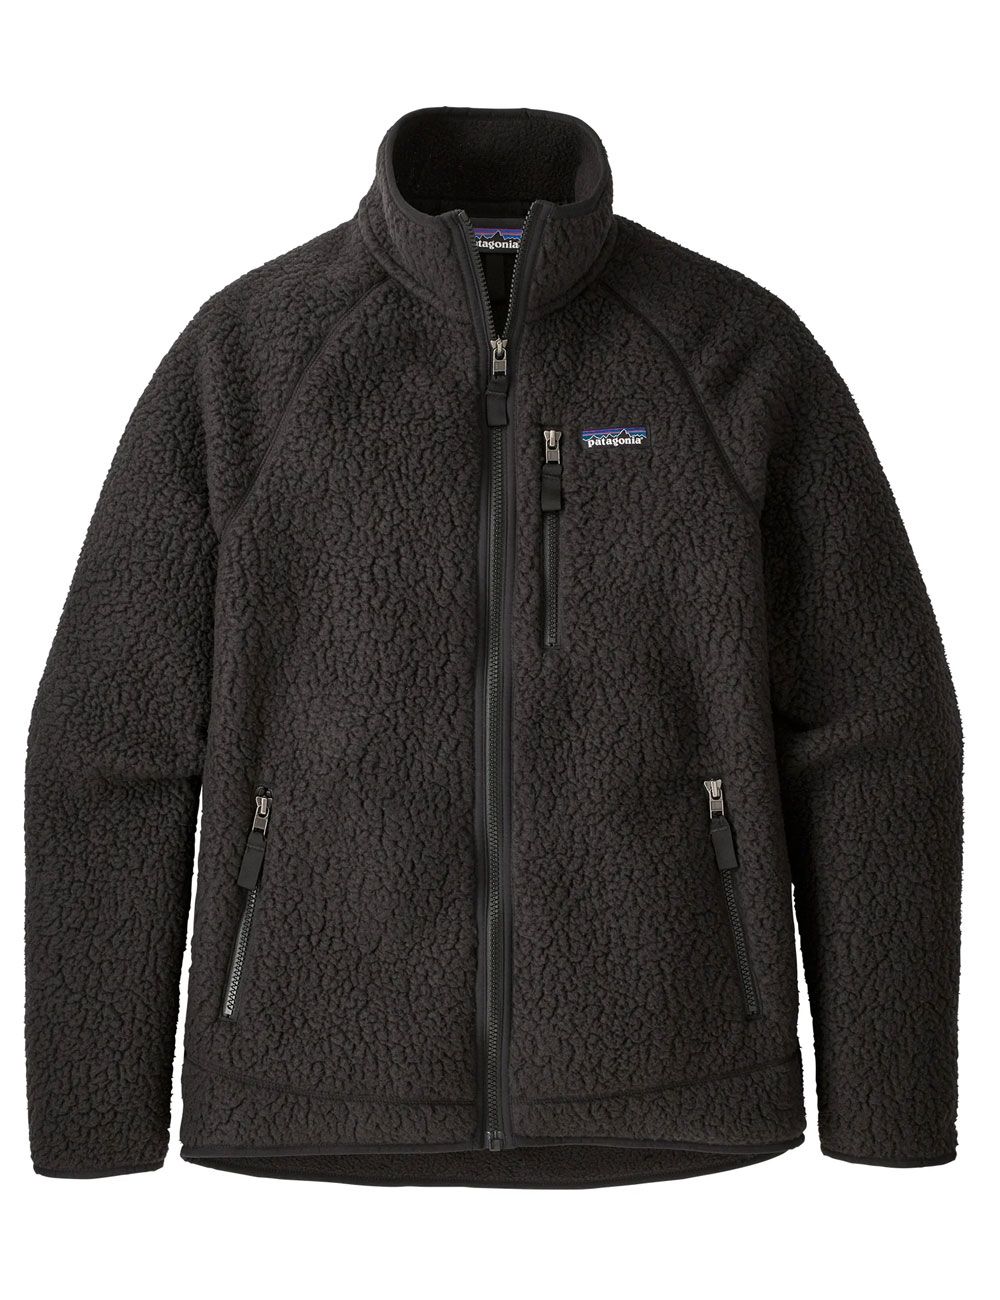 Patagonia Retro pile jacket black